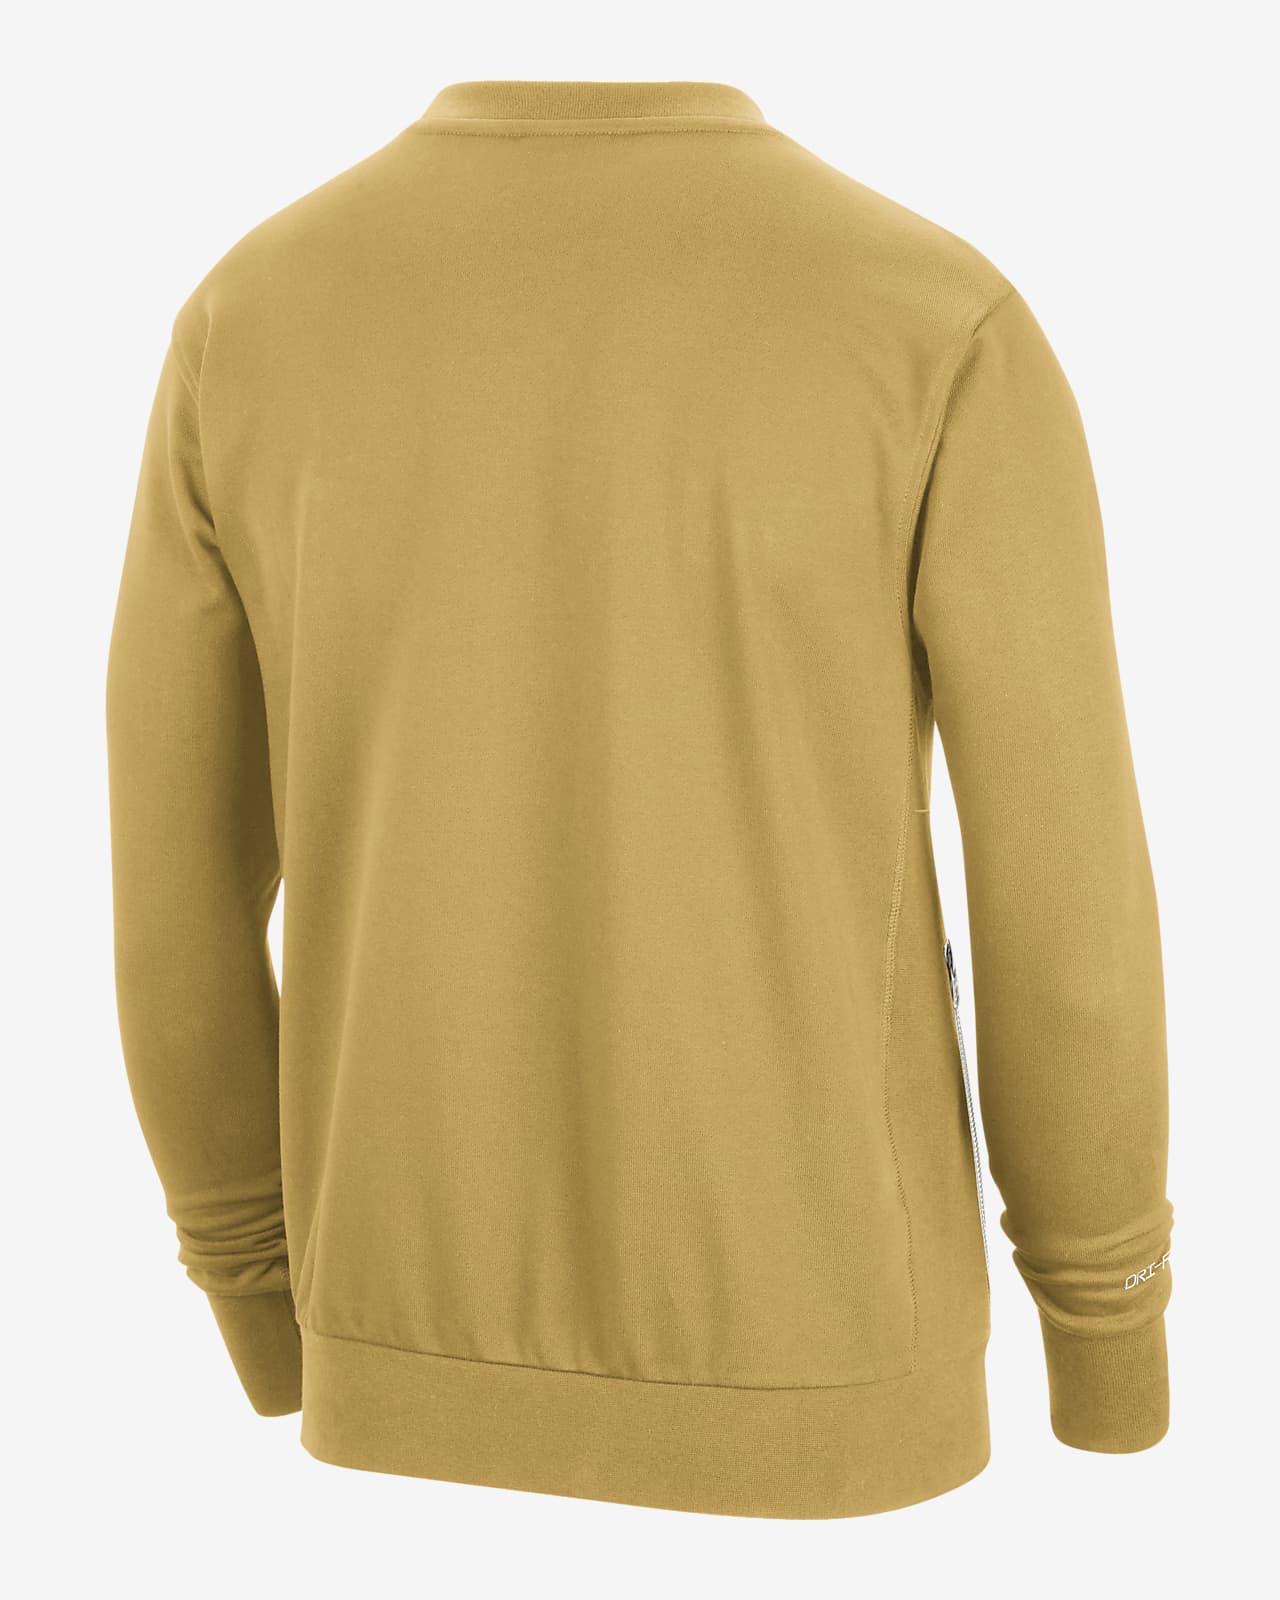 Nike Men\'s Issue Standard Golden Sweatshirt. State NBA Warriors Dri-FIT